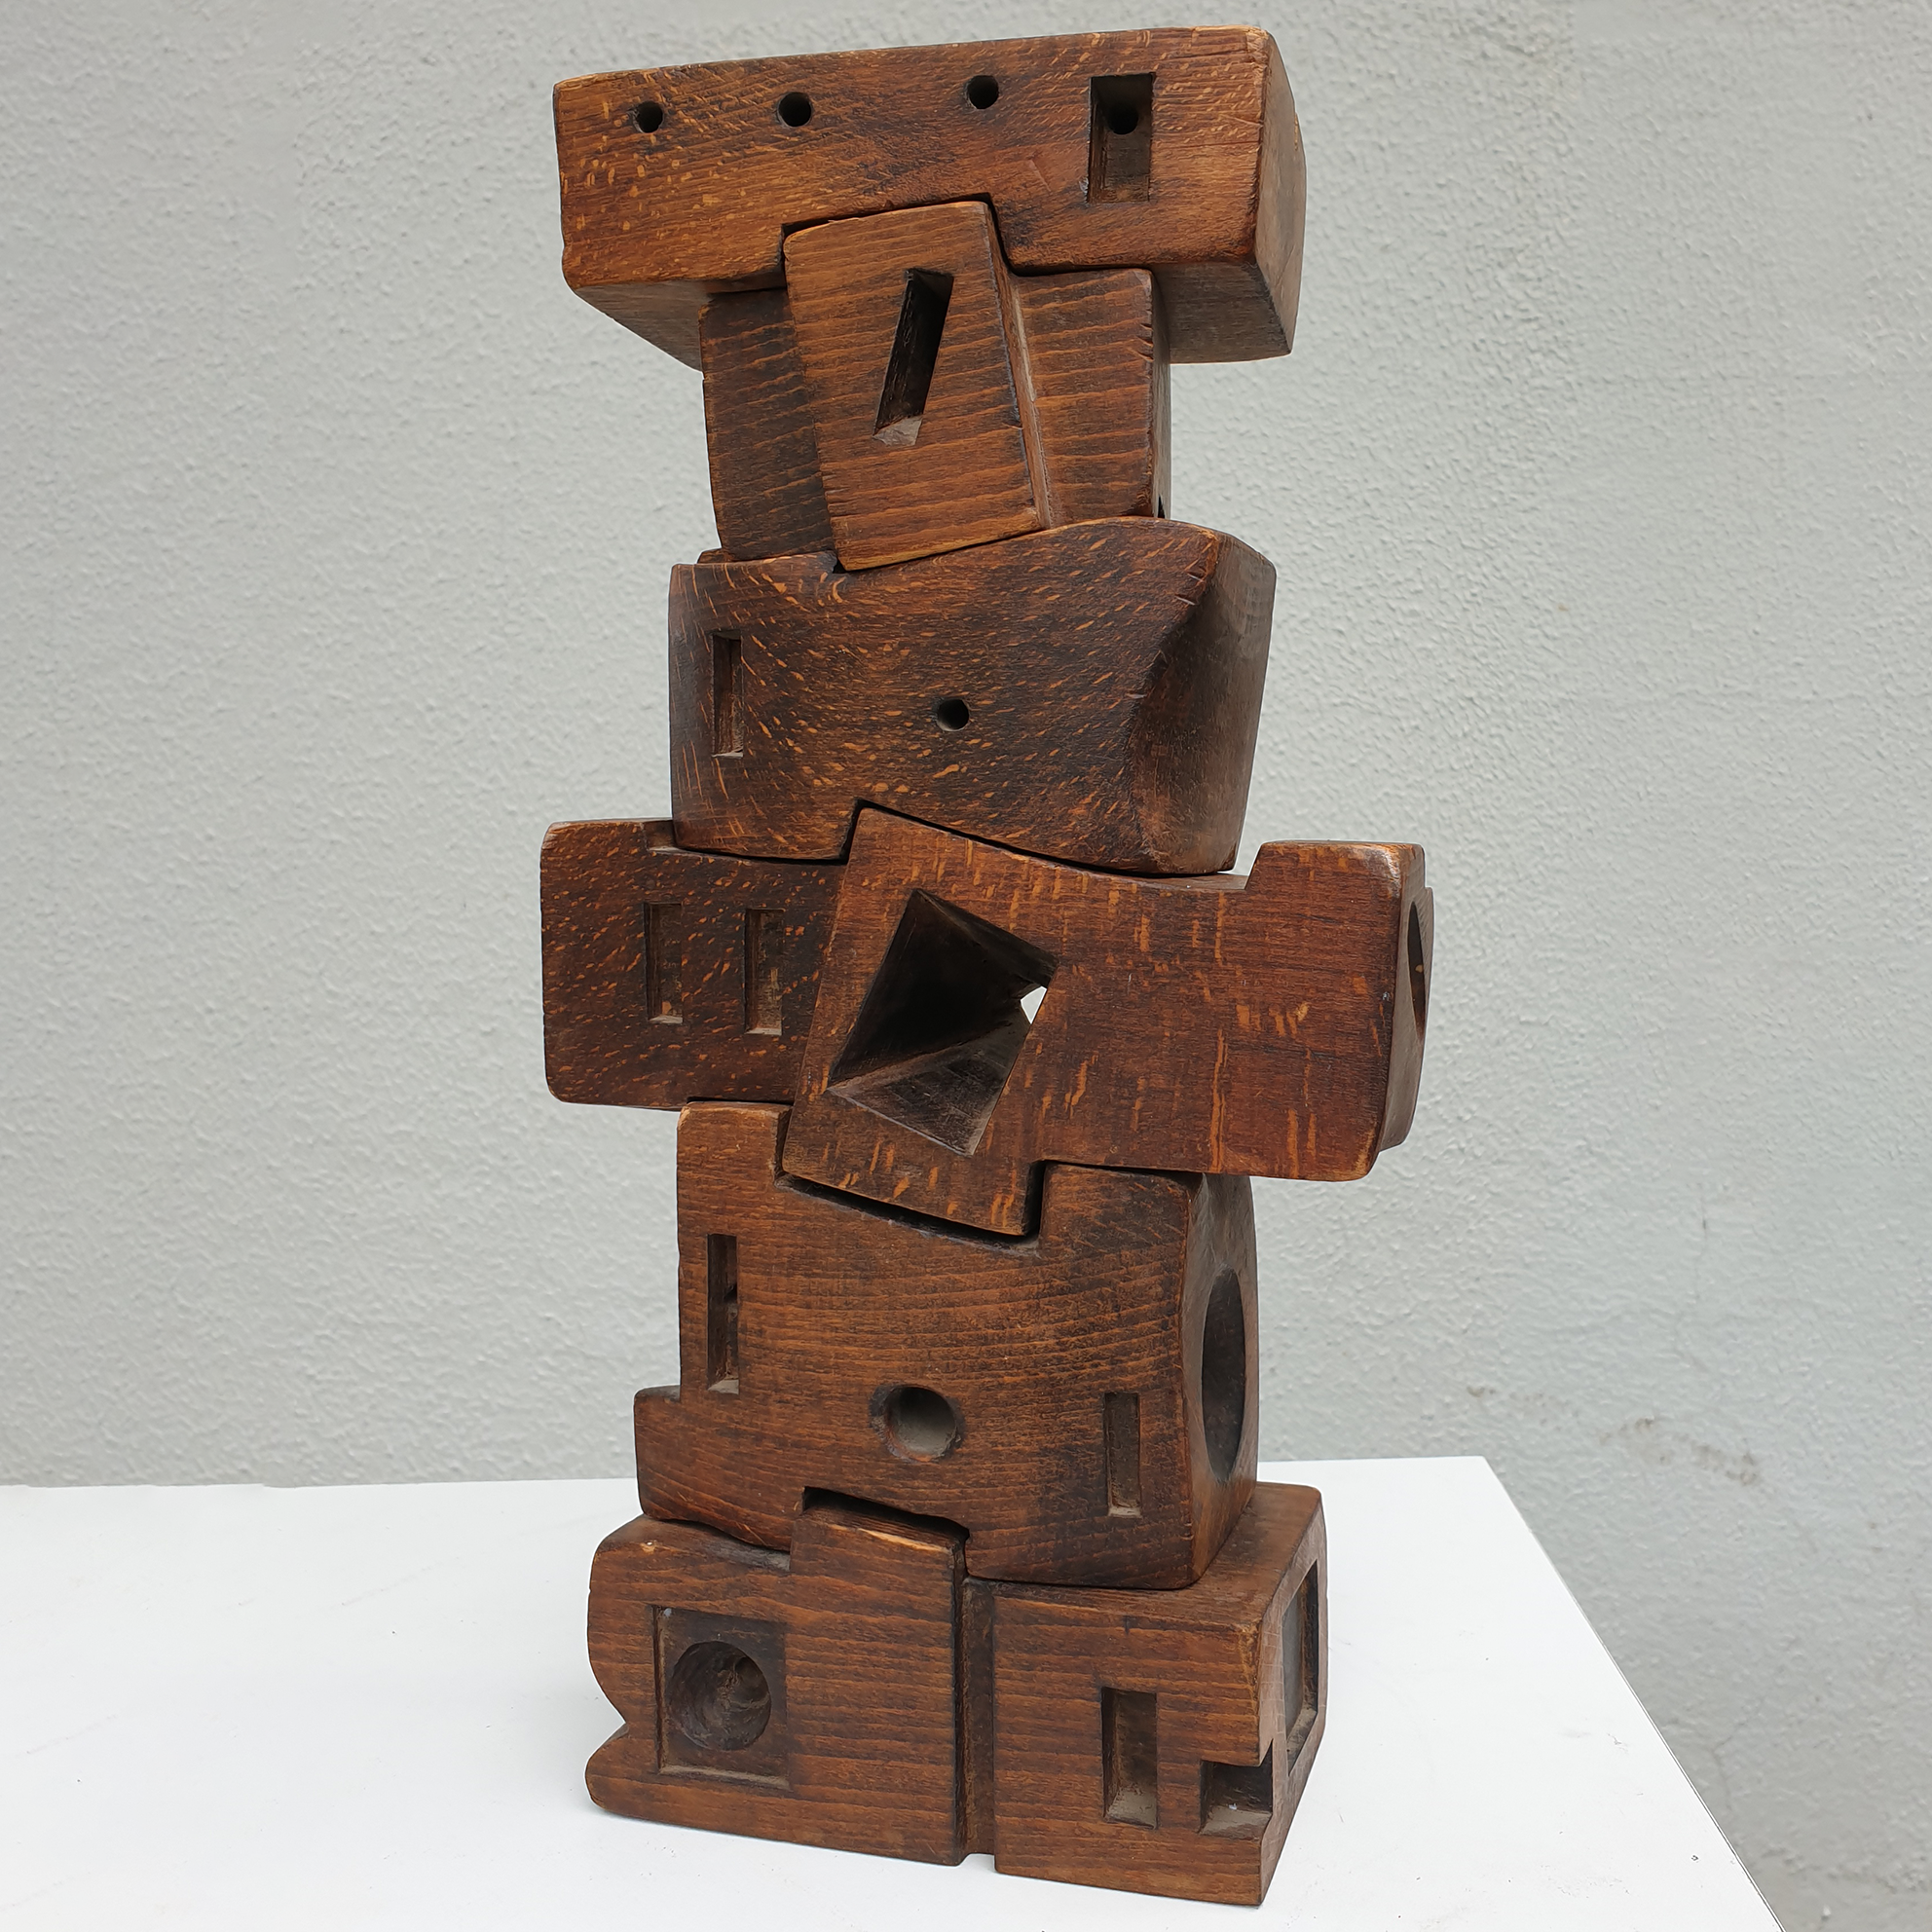 Saloua Raouda Choucair, Composition Material, c. 1963-65, sculpture, 34 x 13 x 7 cm